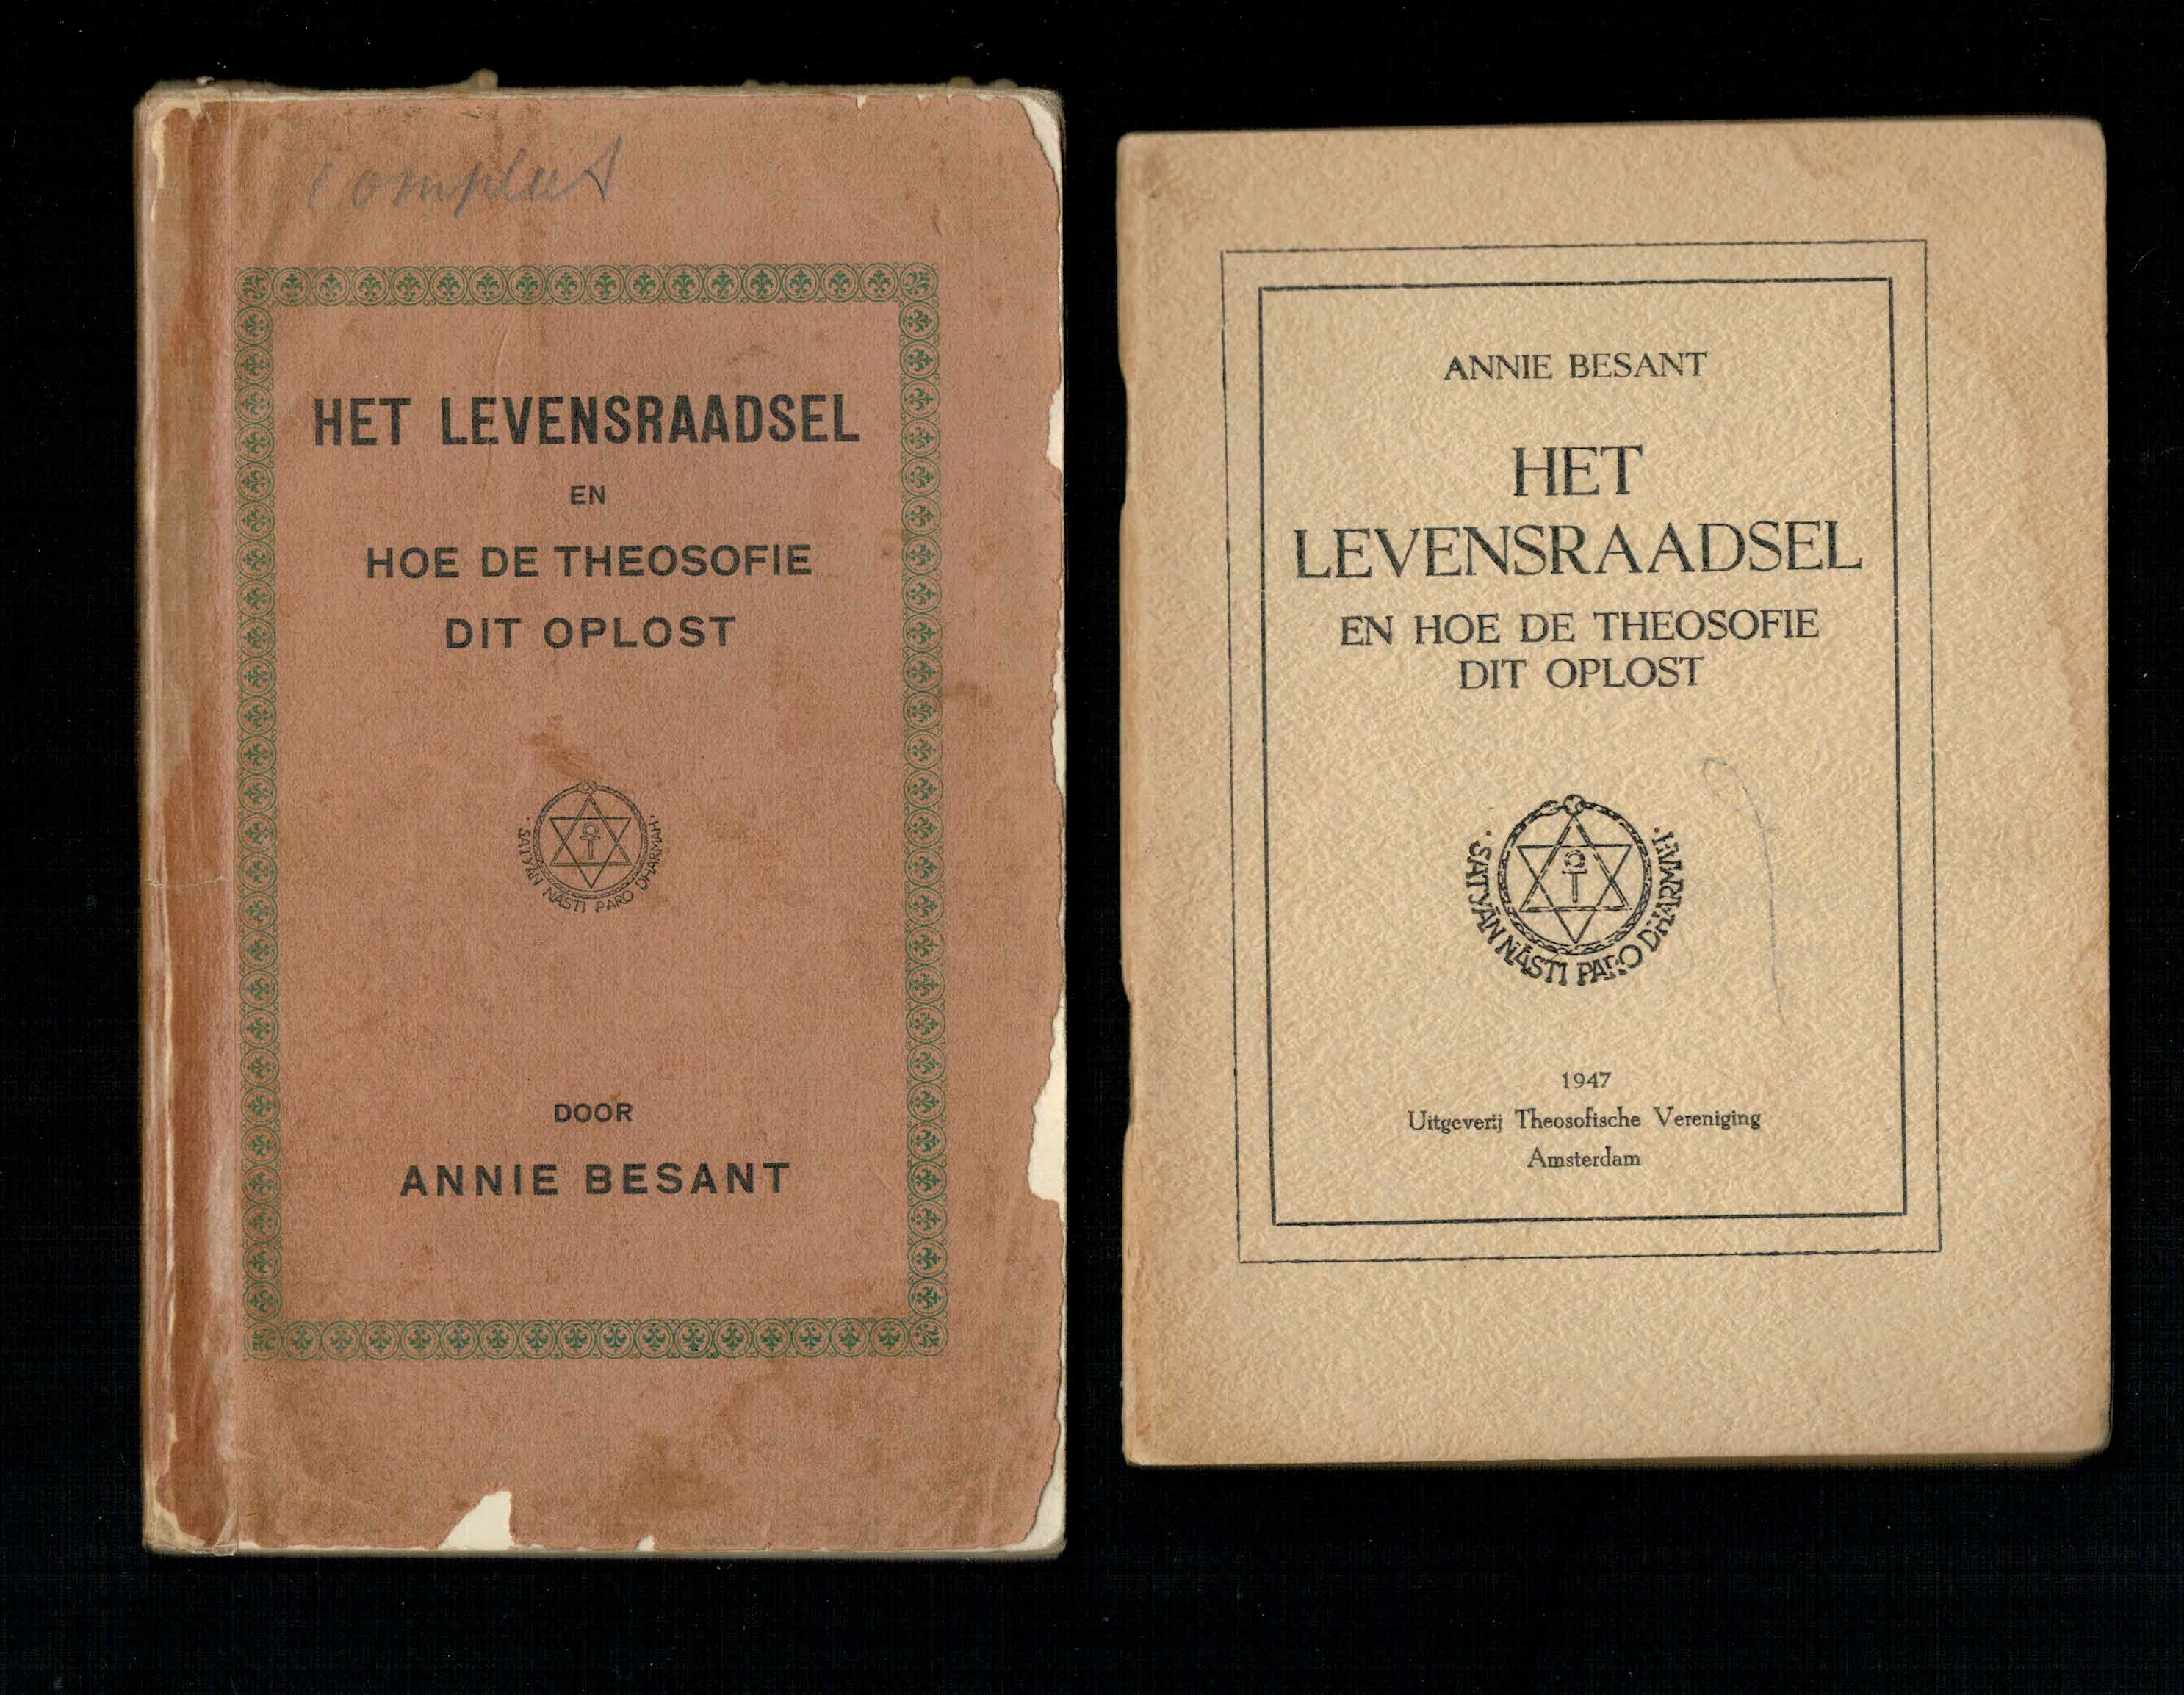 Besant, Annie - Het levensraadsel en hoe de theosofie dit oplost 2 uitgaven 1911 en 1947.